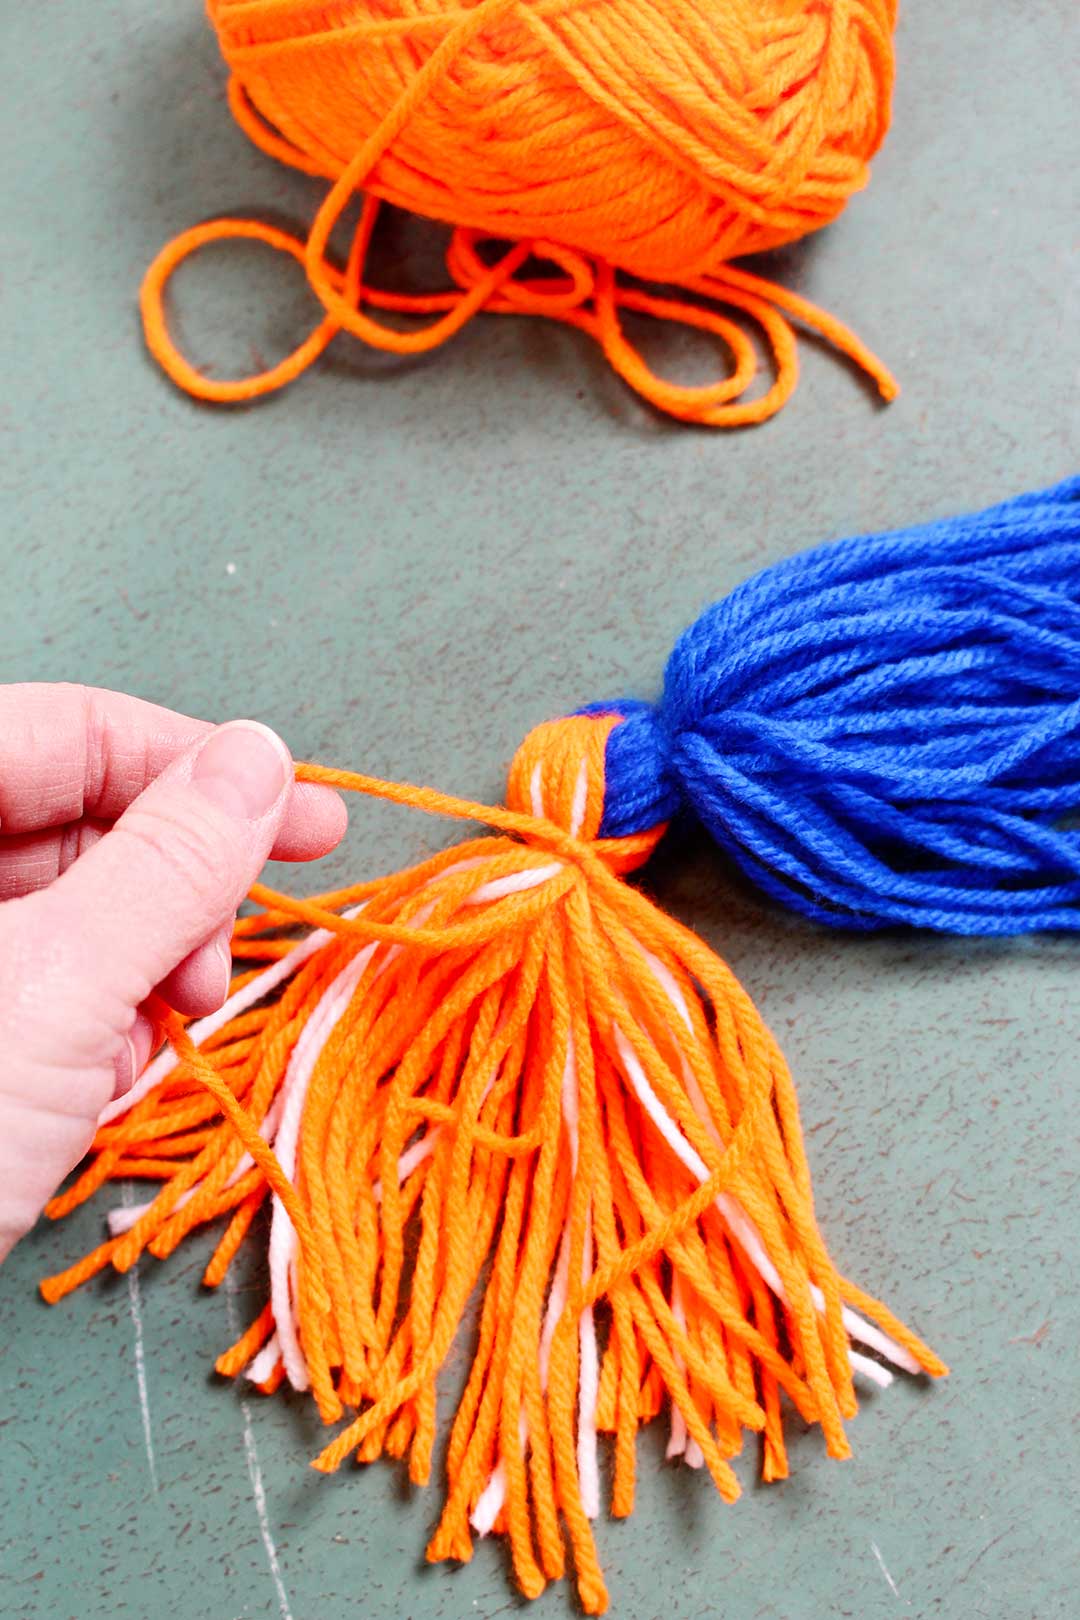 Wrapping a piece of orange yarn around a bunch of yarn.